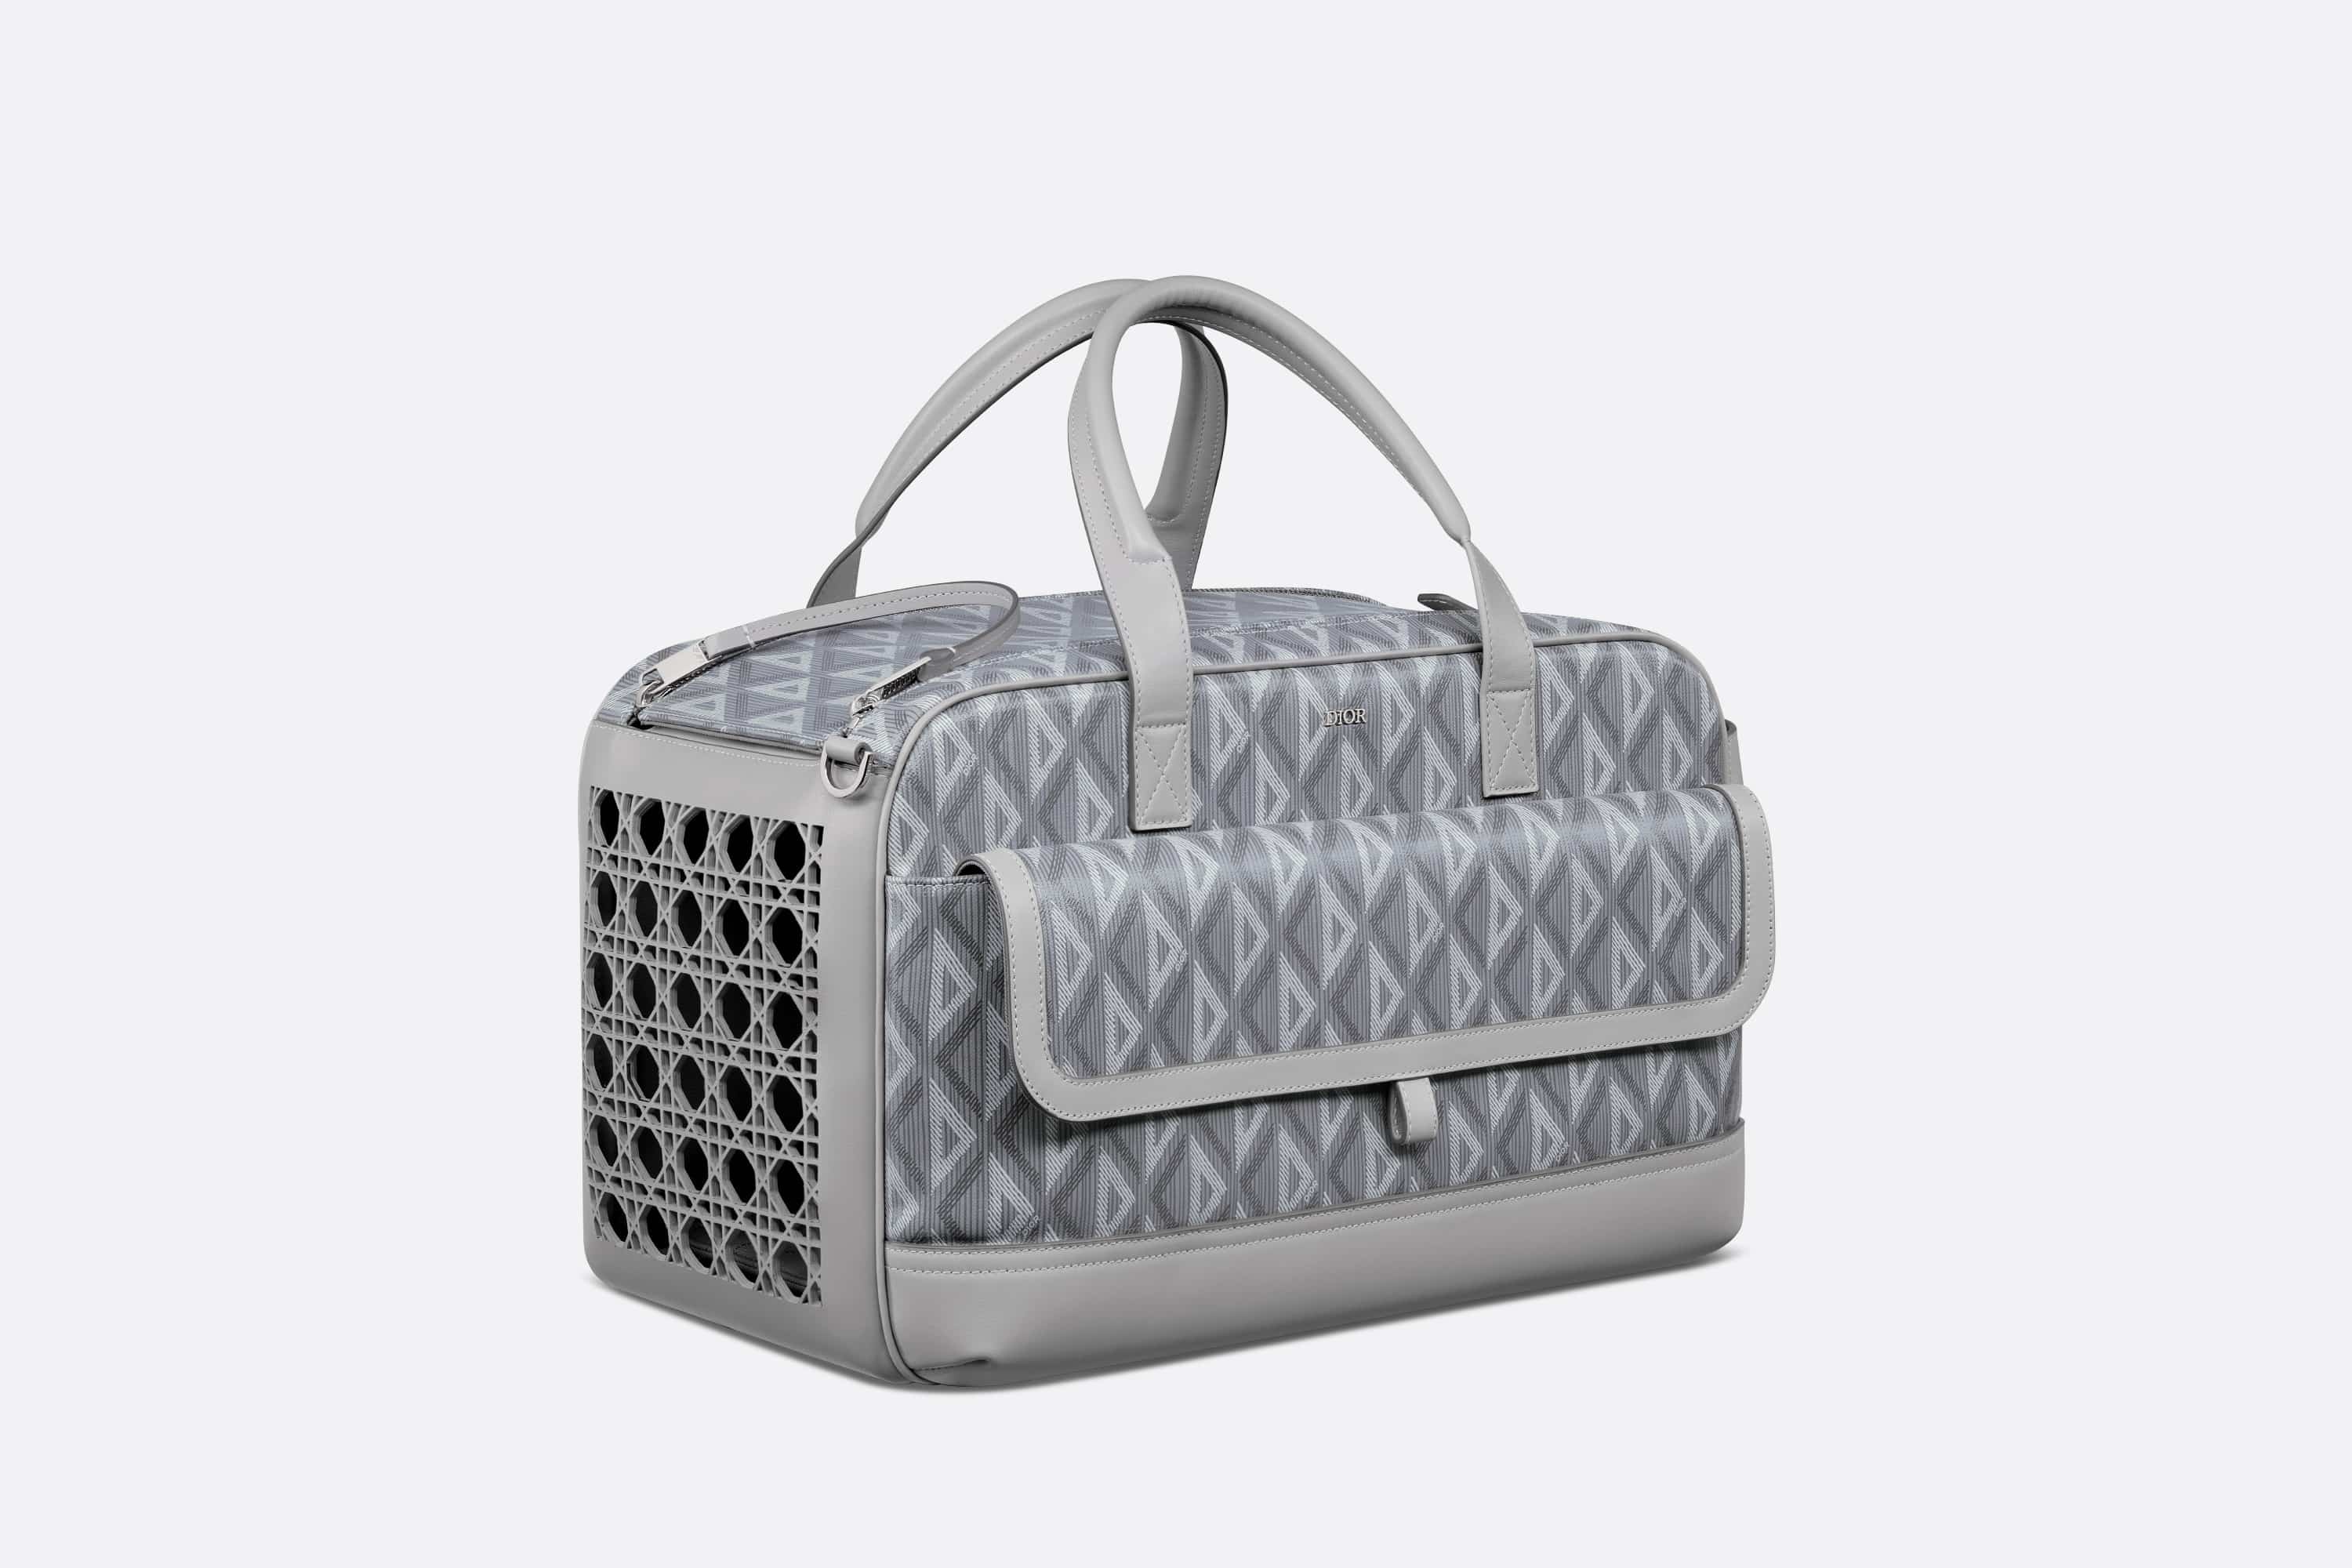 Dior Hit The Road Pet Carrier Bag - 4